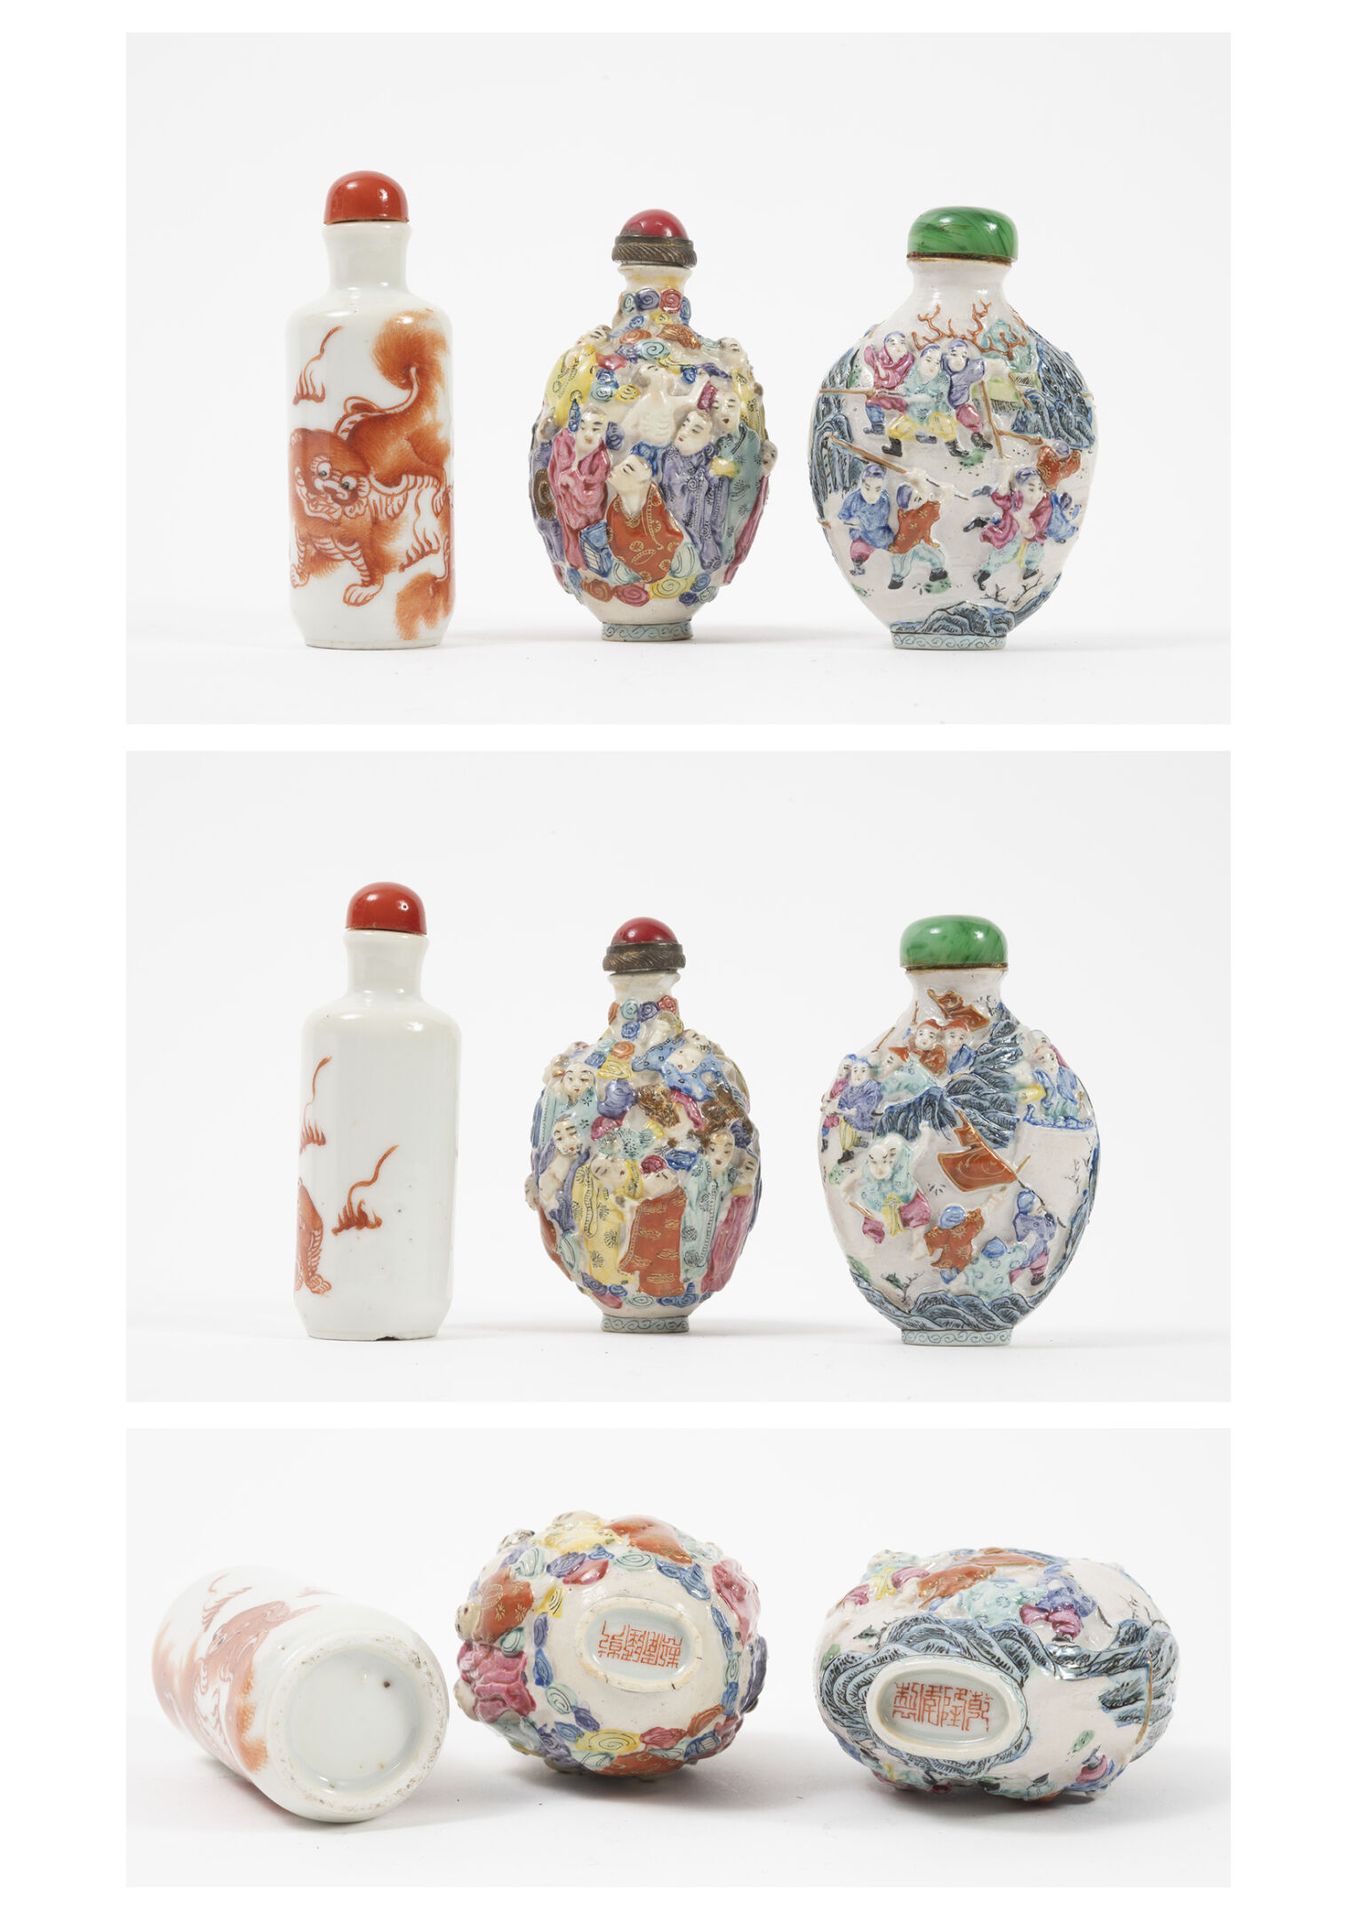 CHINE, XXème isècle Tres botellas de rapé de porcelana blanca: 

- Una decorada &hellip;